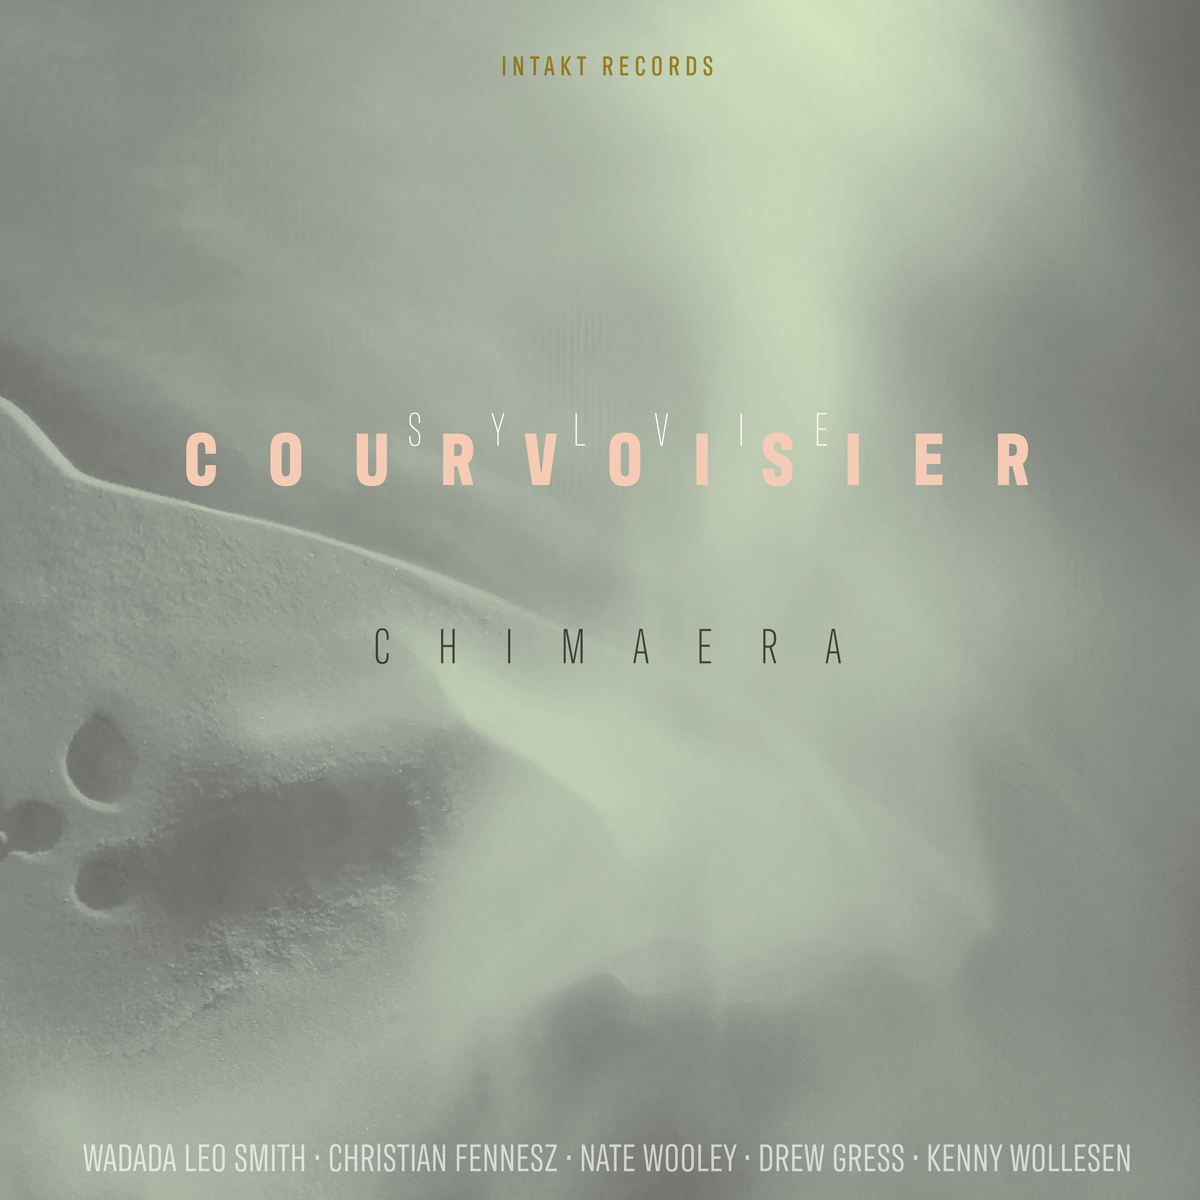 SYLVIE COURVOISIER
CHIMAERA cover front intakt records